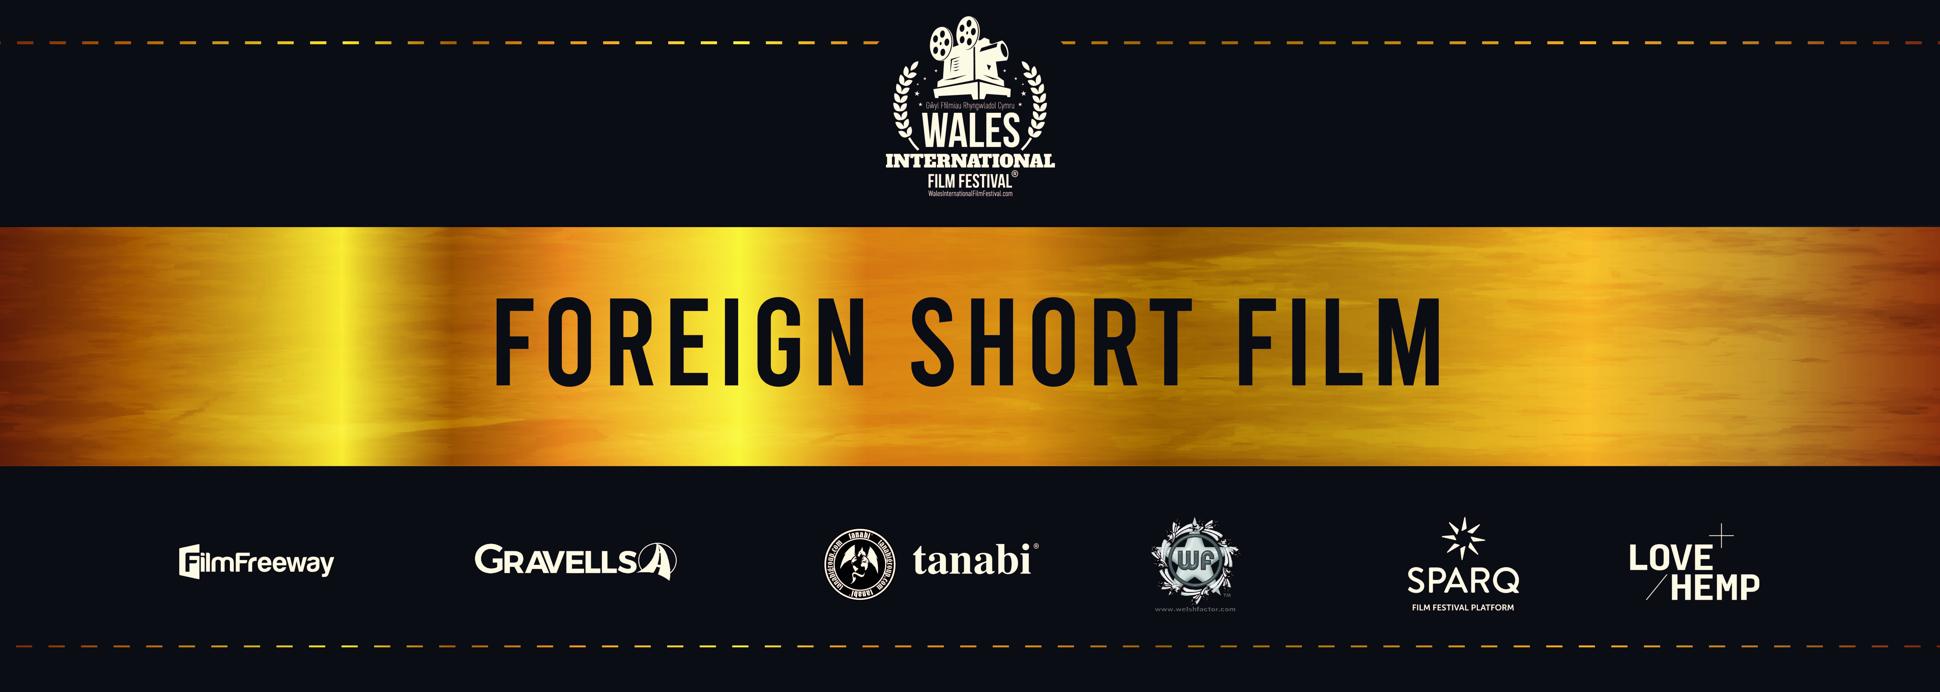 Foreign Short Film